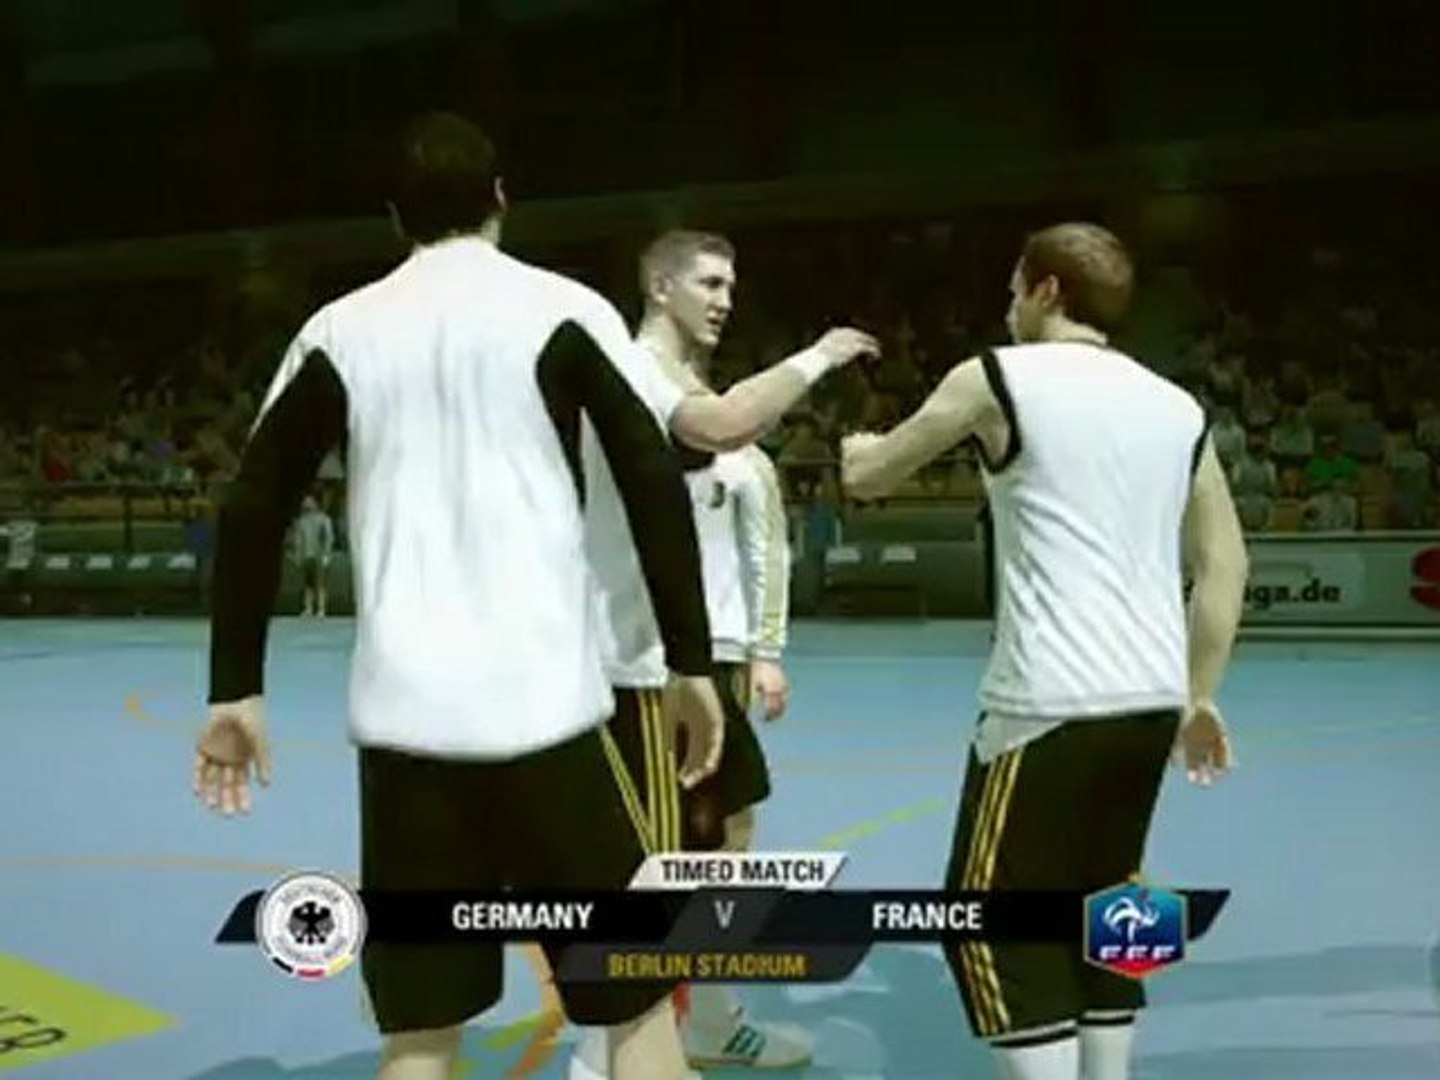 FIFA STREET Germany vs. France "Futsal" Gameplay Video - video Dailymotion